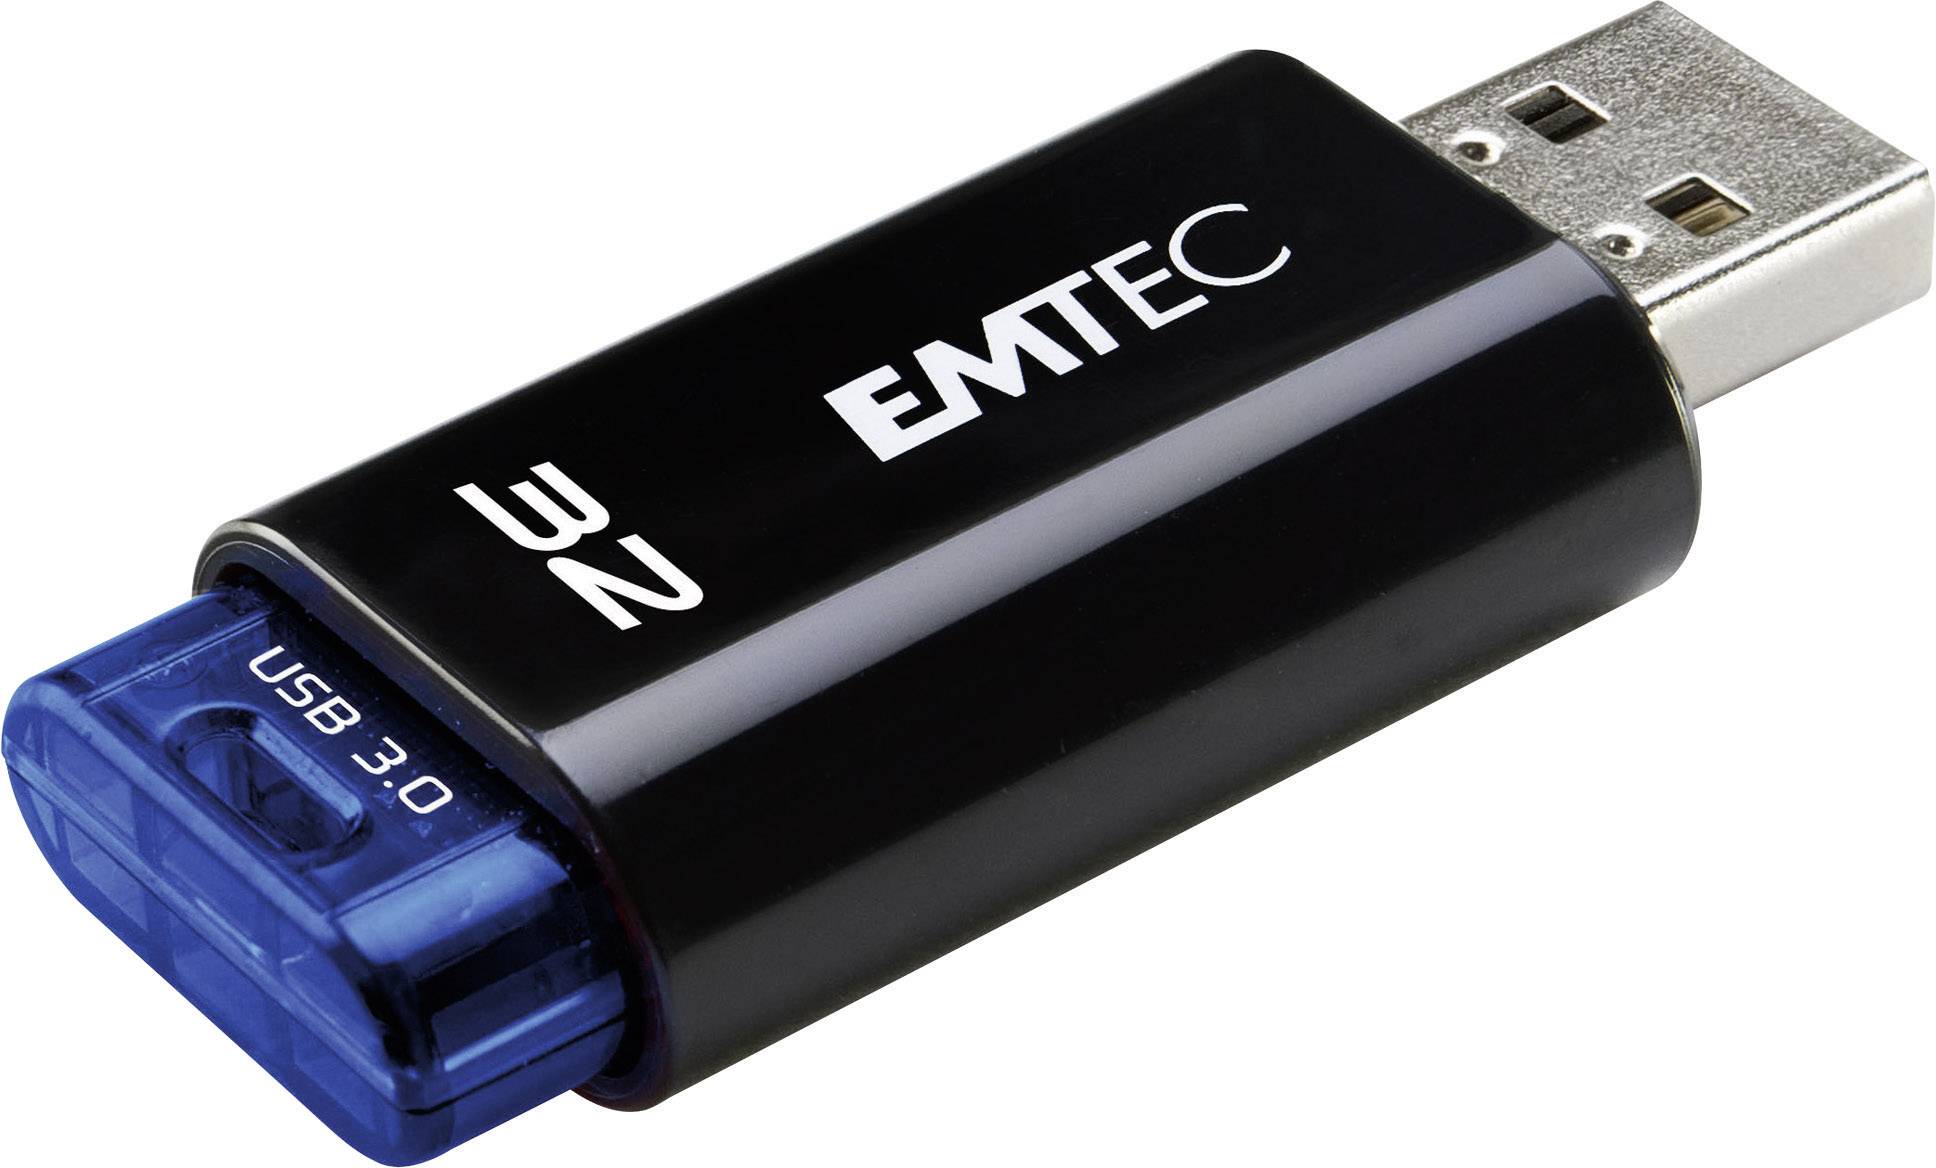 Флешка usb c usb 3.0. Флешка 32 ГБ. Флешка USB 3.0 перевертыш. Emtec c452. Флешка Emtec m200 32gb.